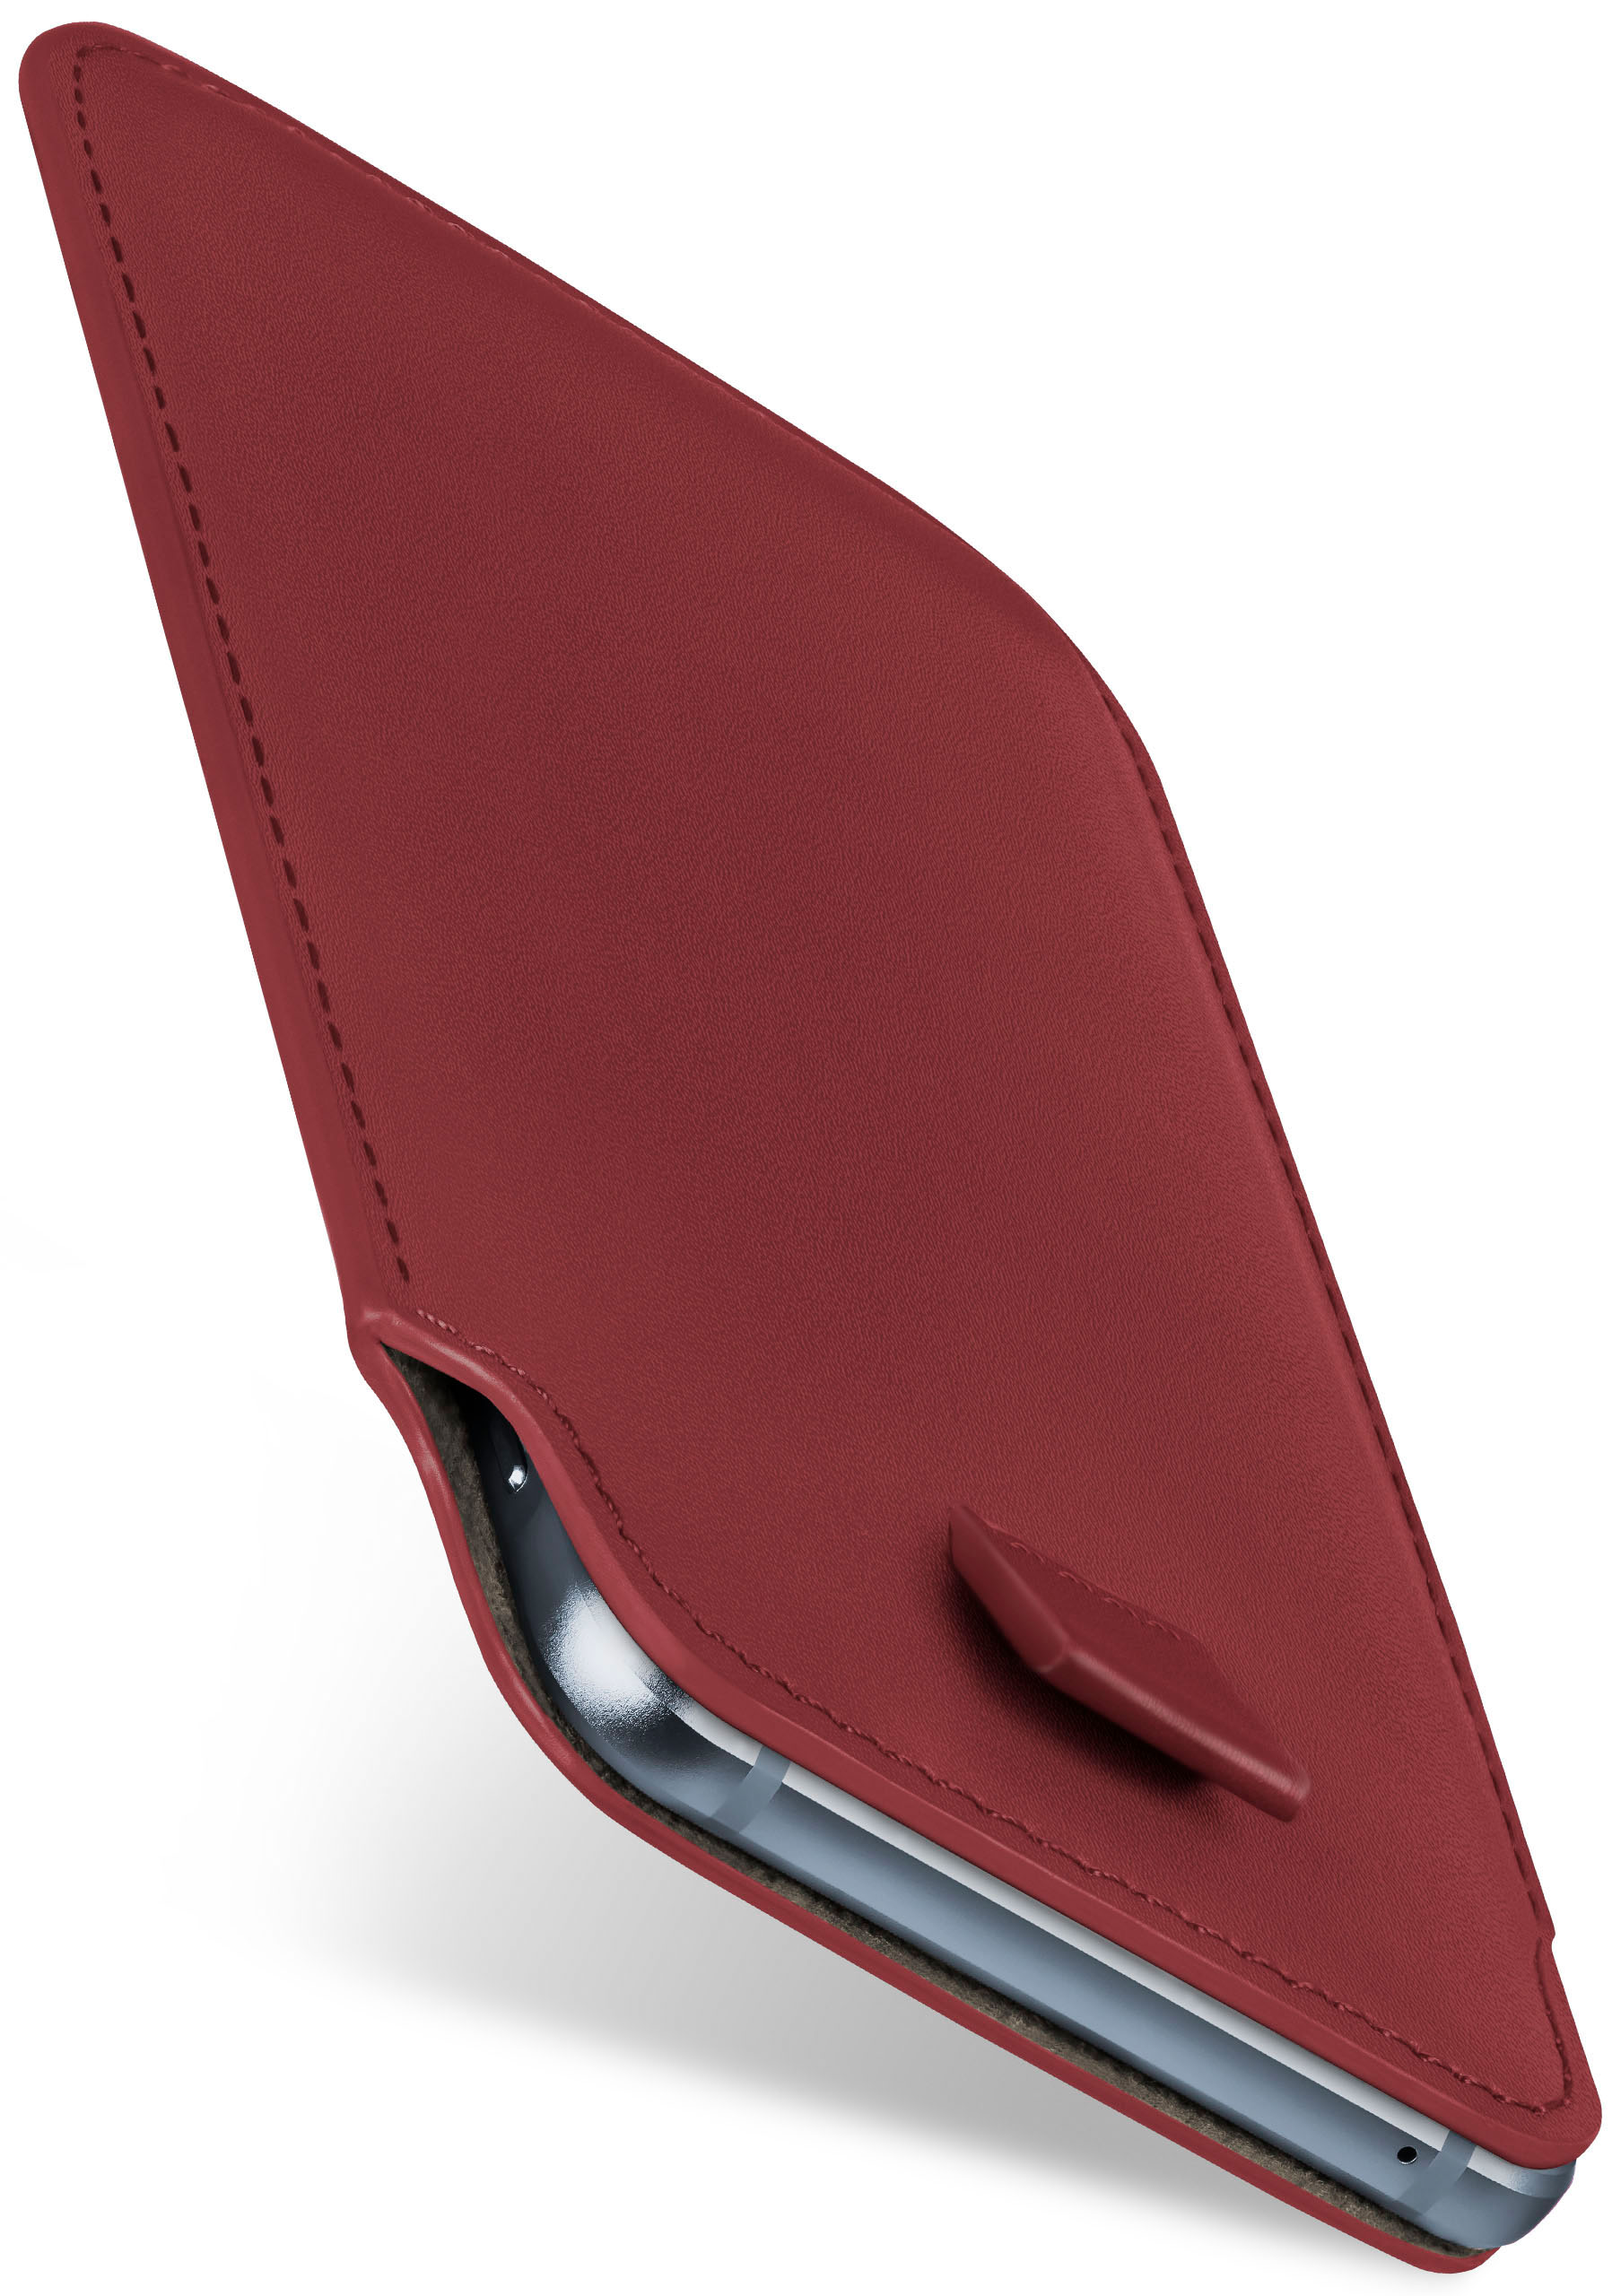 Slide MOEX Plus, Huawei, Case, P10 Cover, Maroon-Red Full